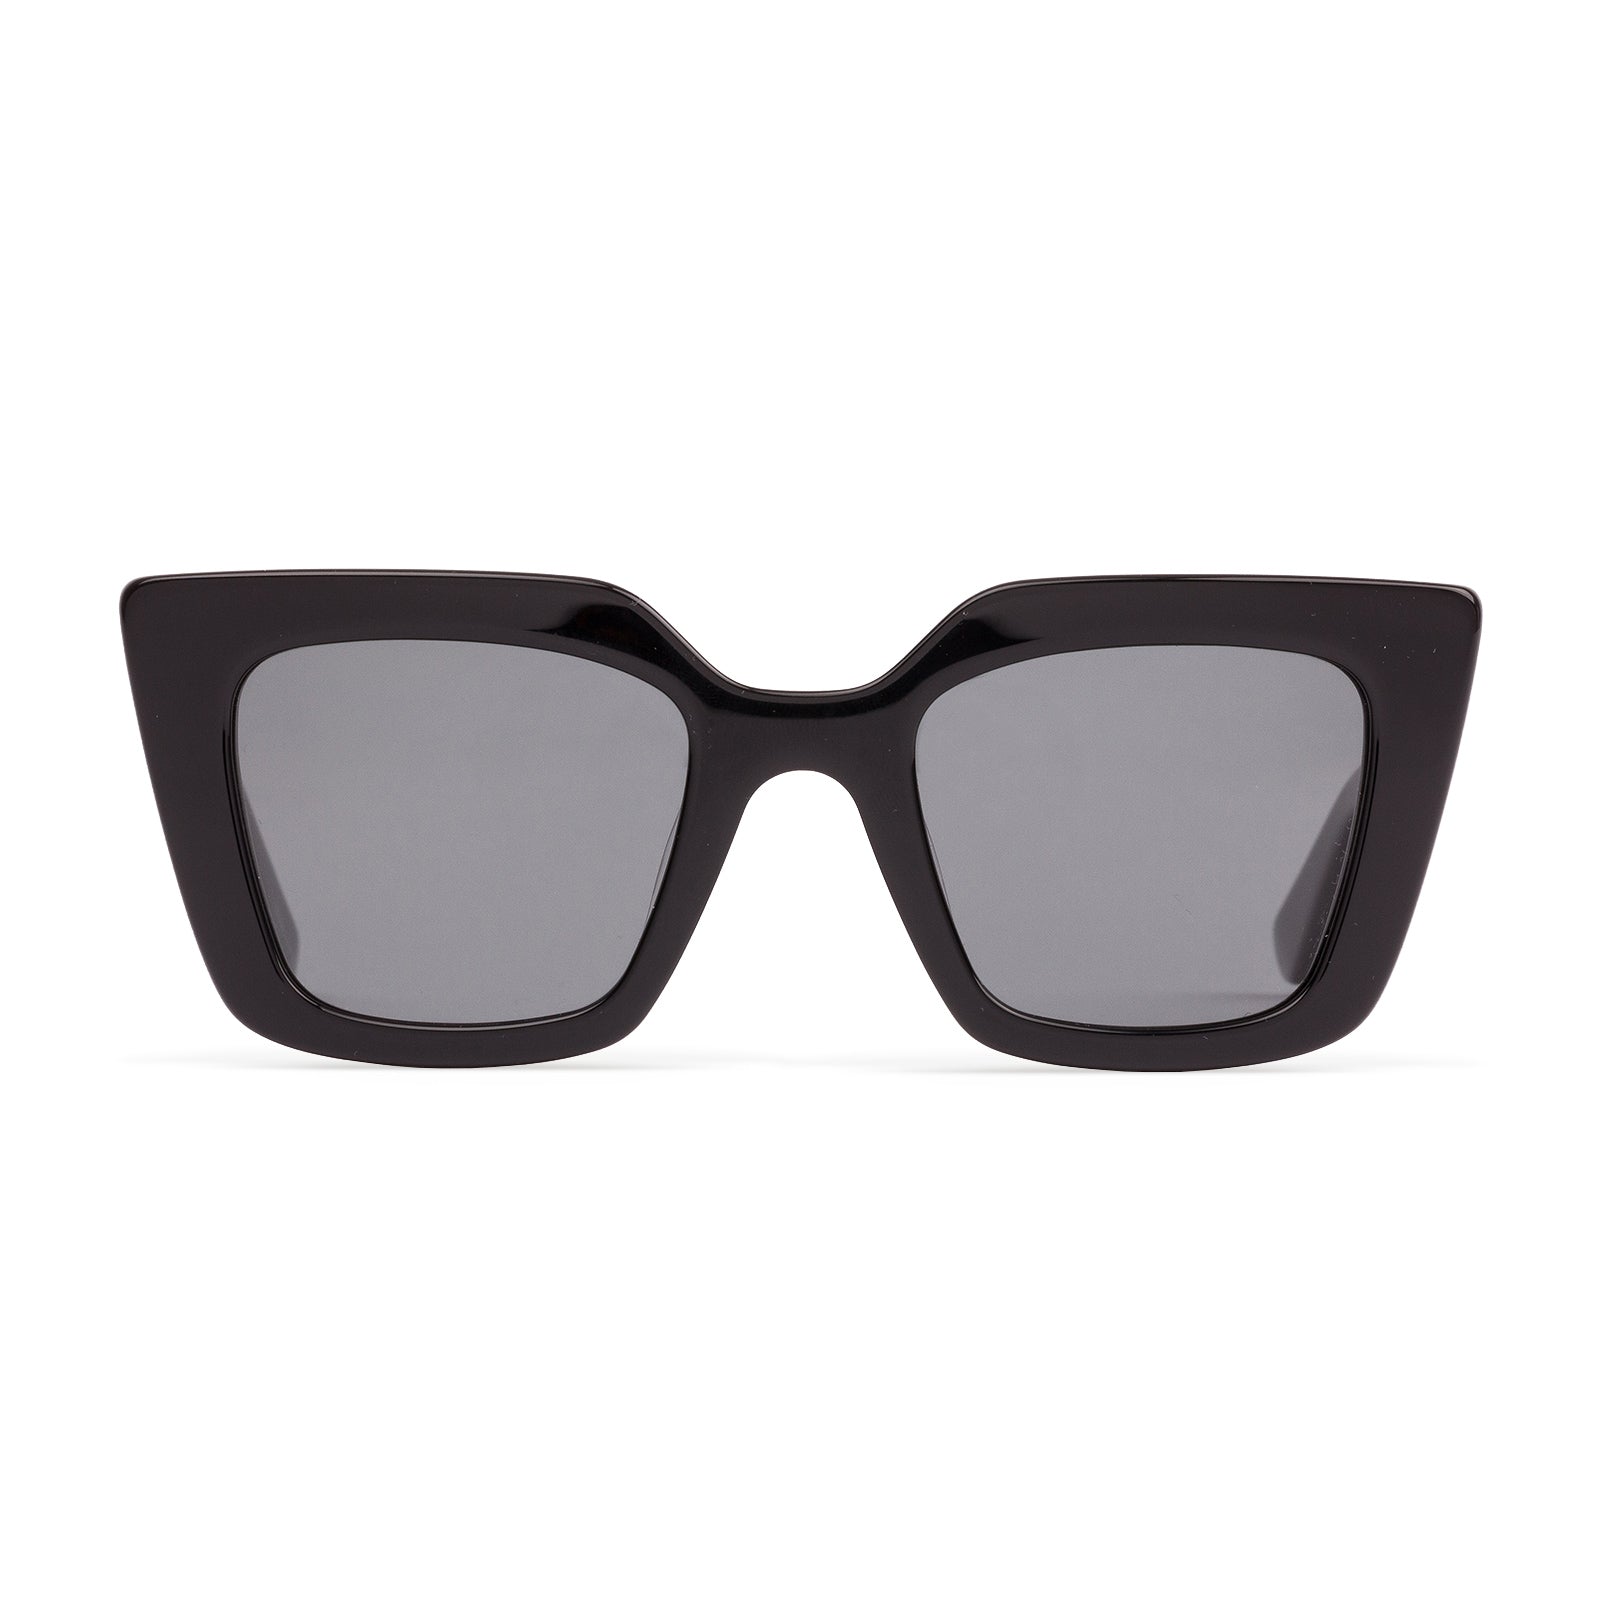 Sito Cult Vision Polarized Sunglasses Black IronGrey